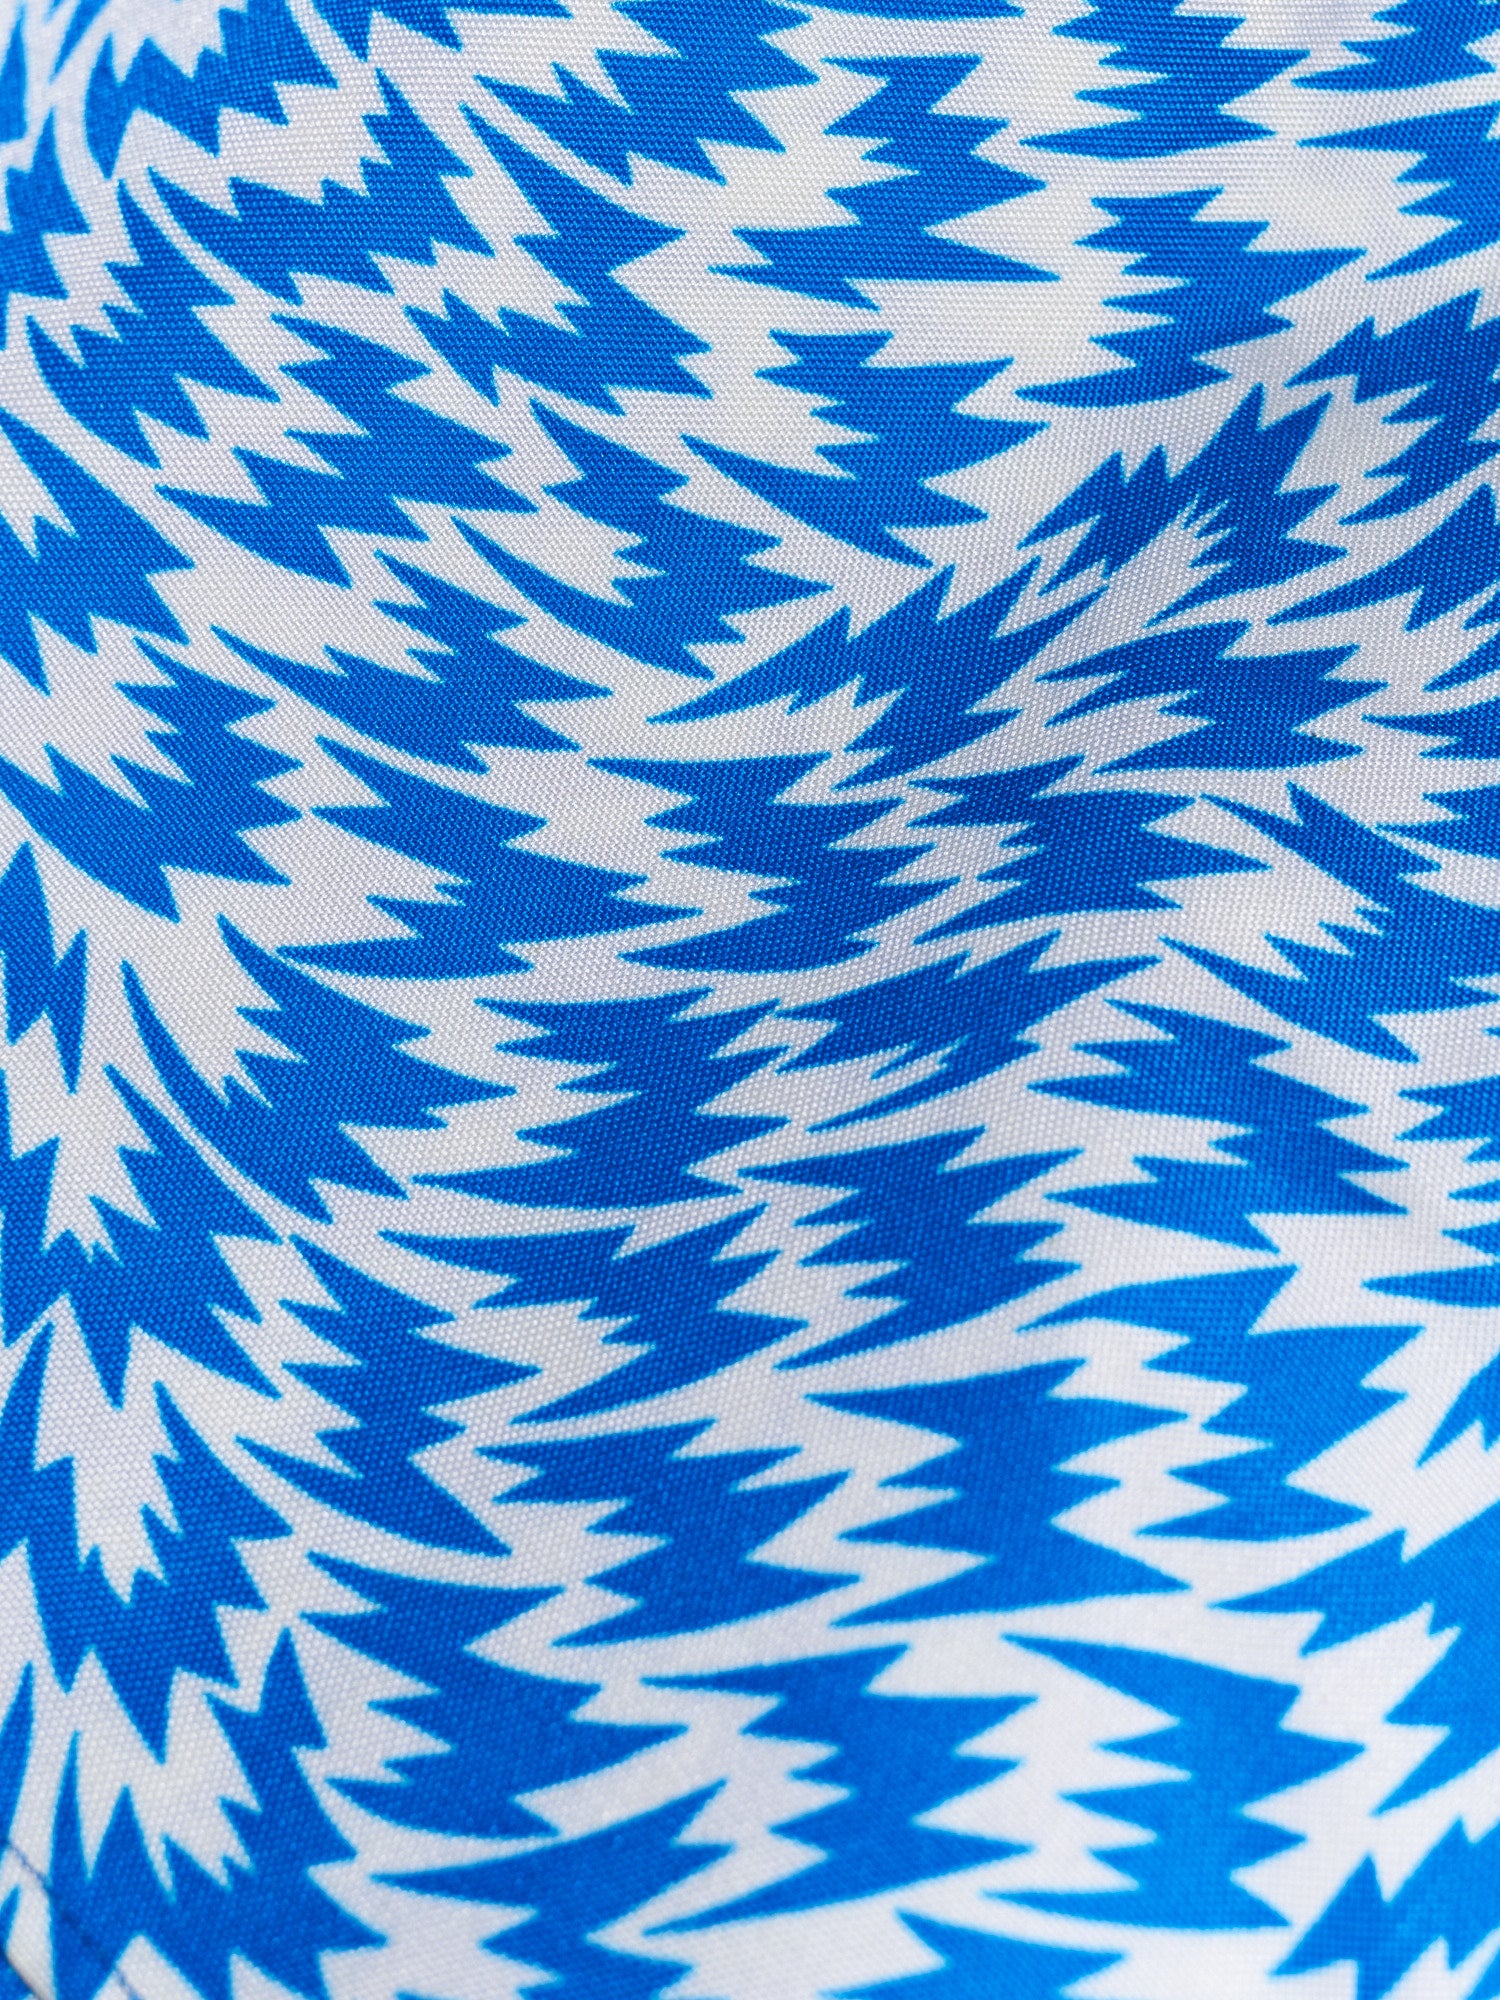 Eastpak x Eley Kishimoto 2009 blue corduroa nylon flash print messenger bag